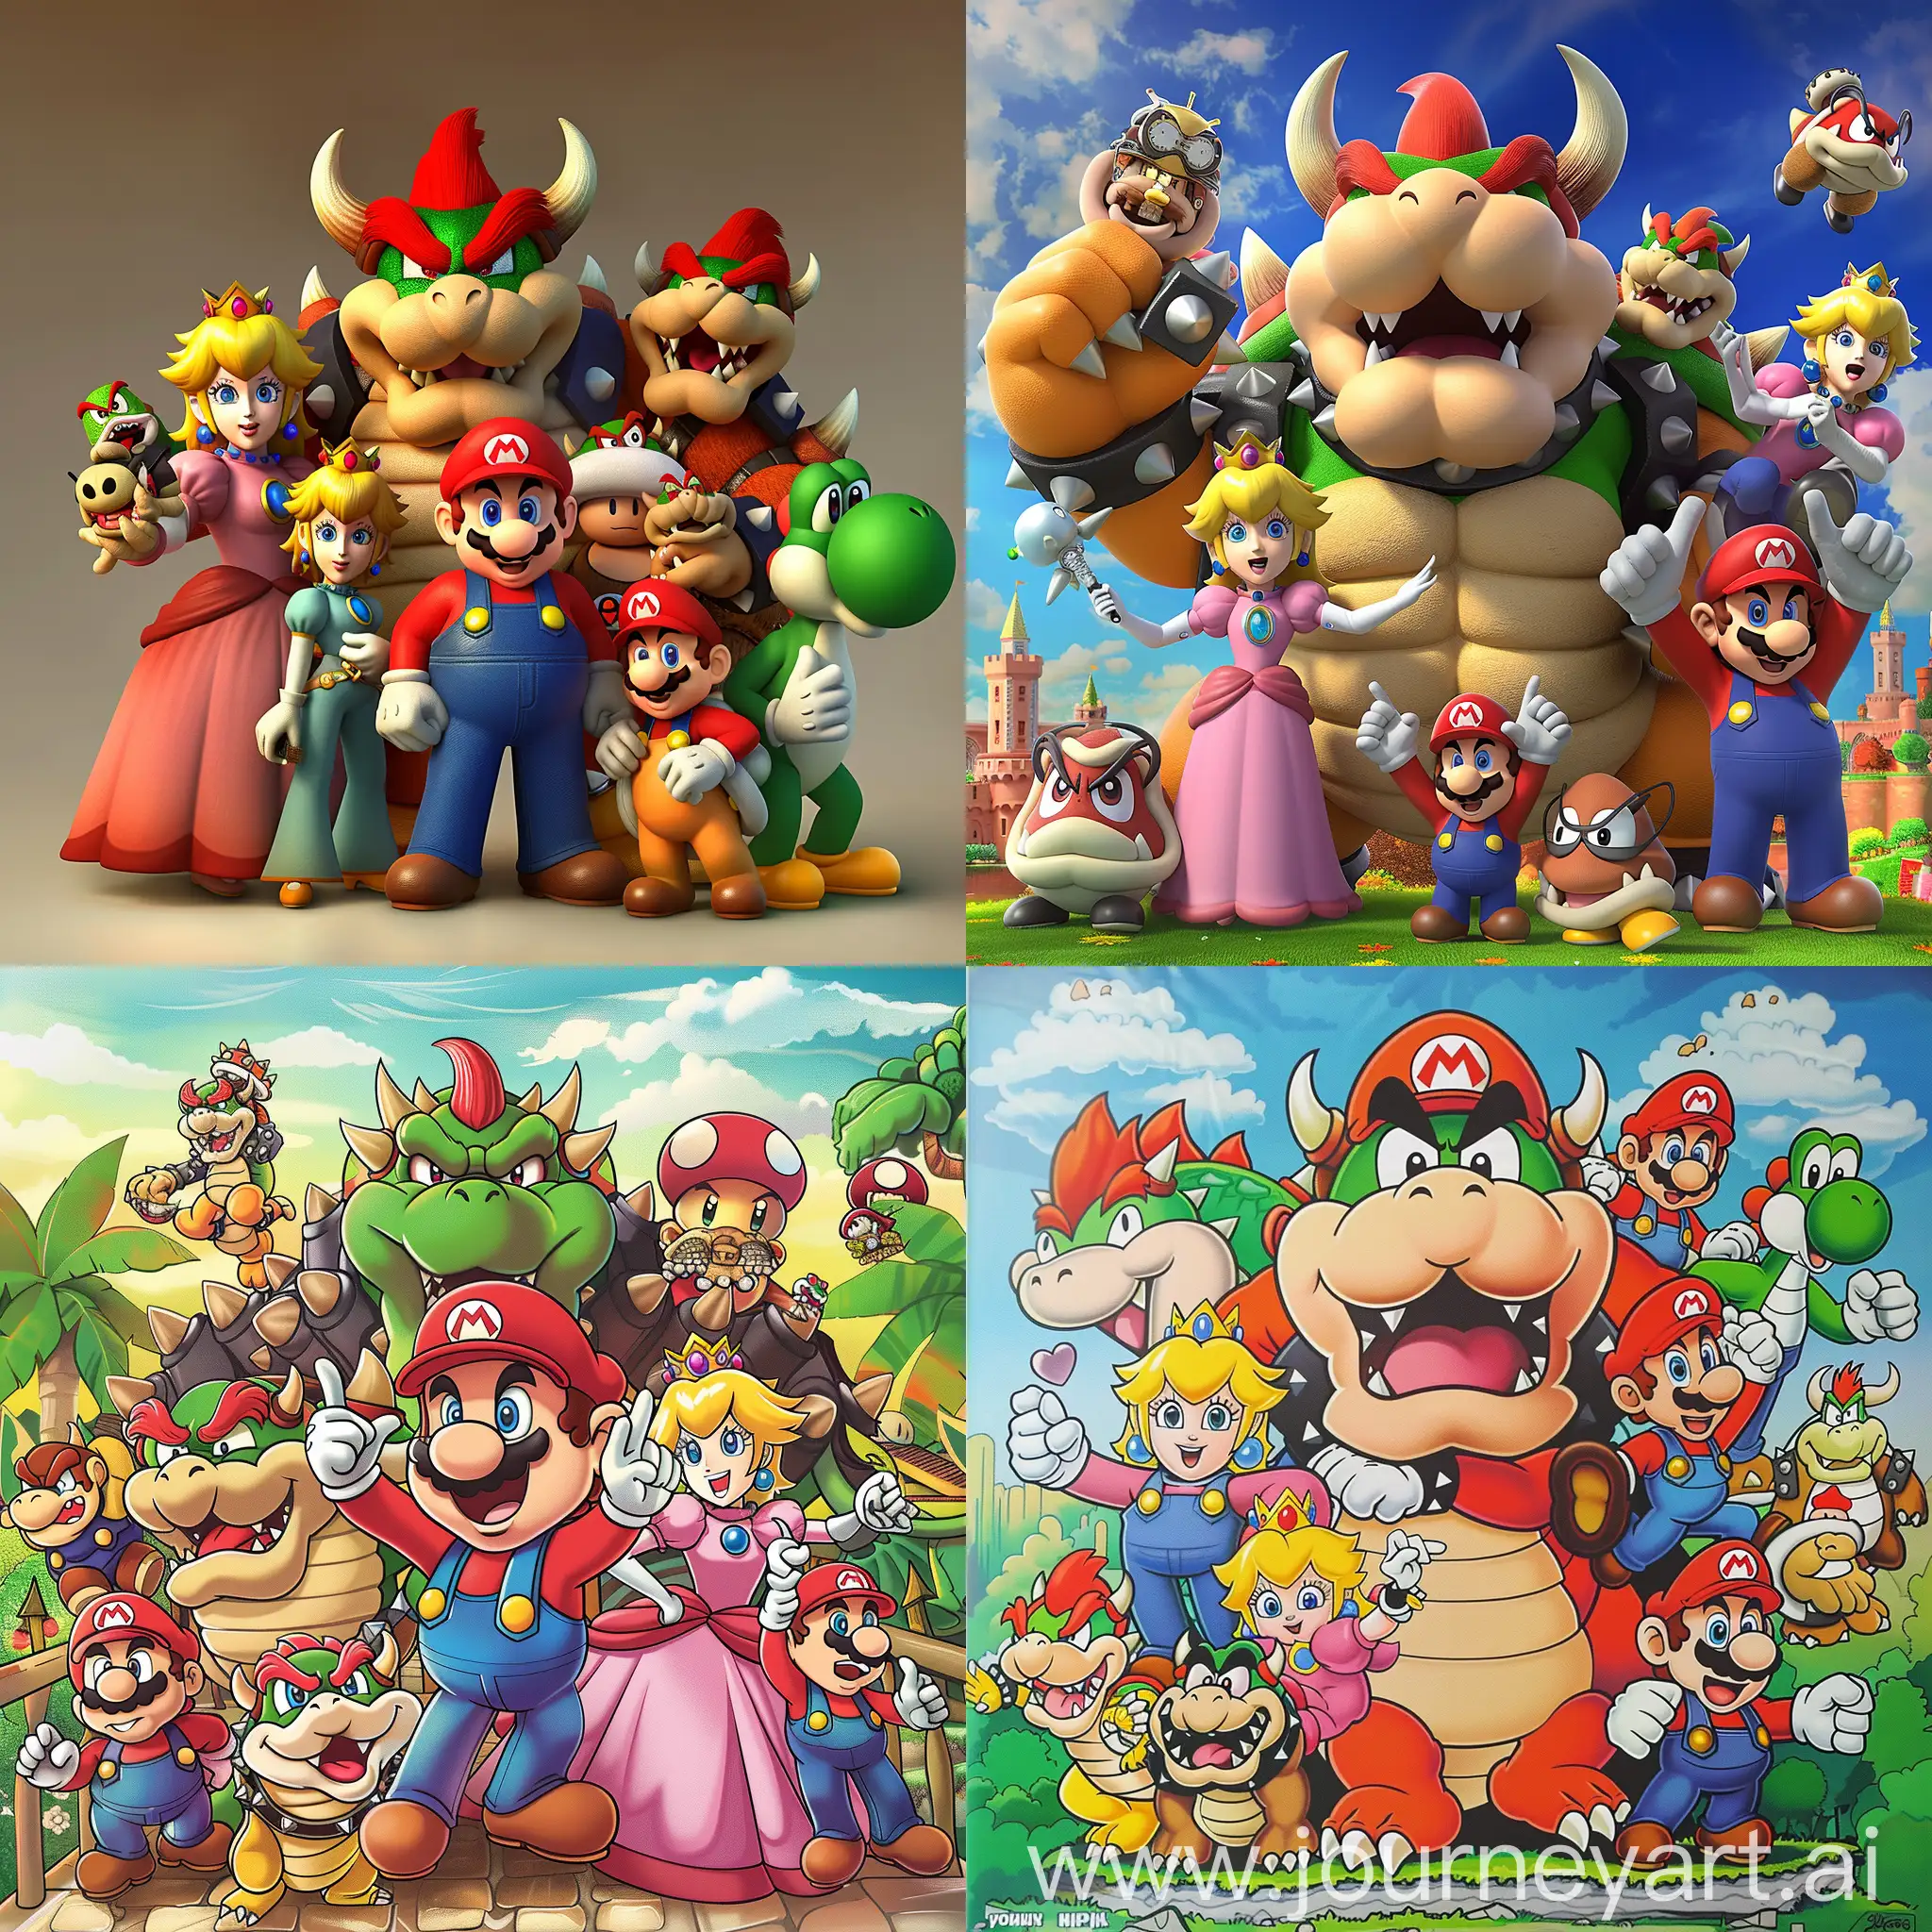 Joyful-Gathering-of-Mario-and-Friends-in-a-Vibrant-Wonderland